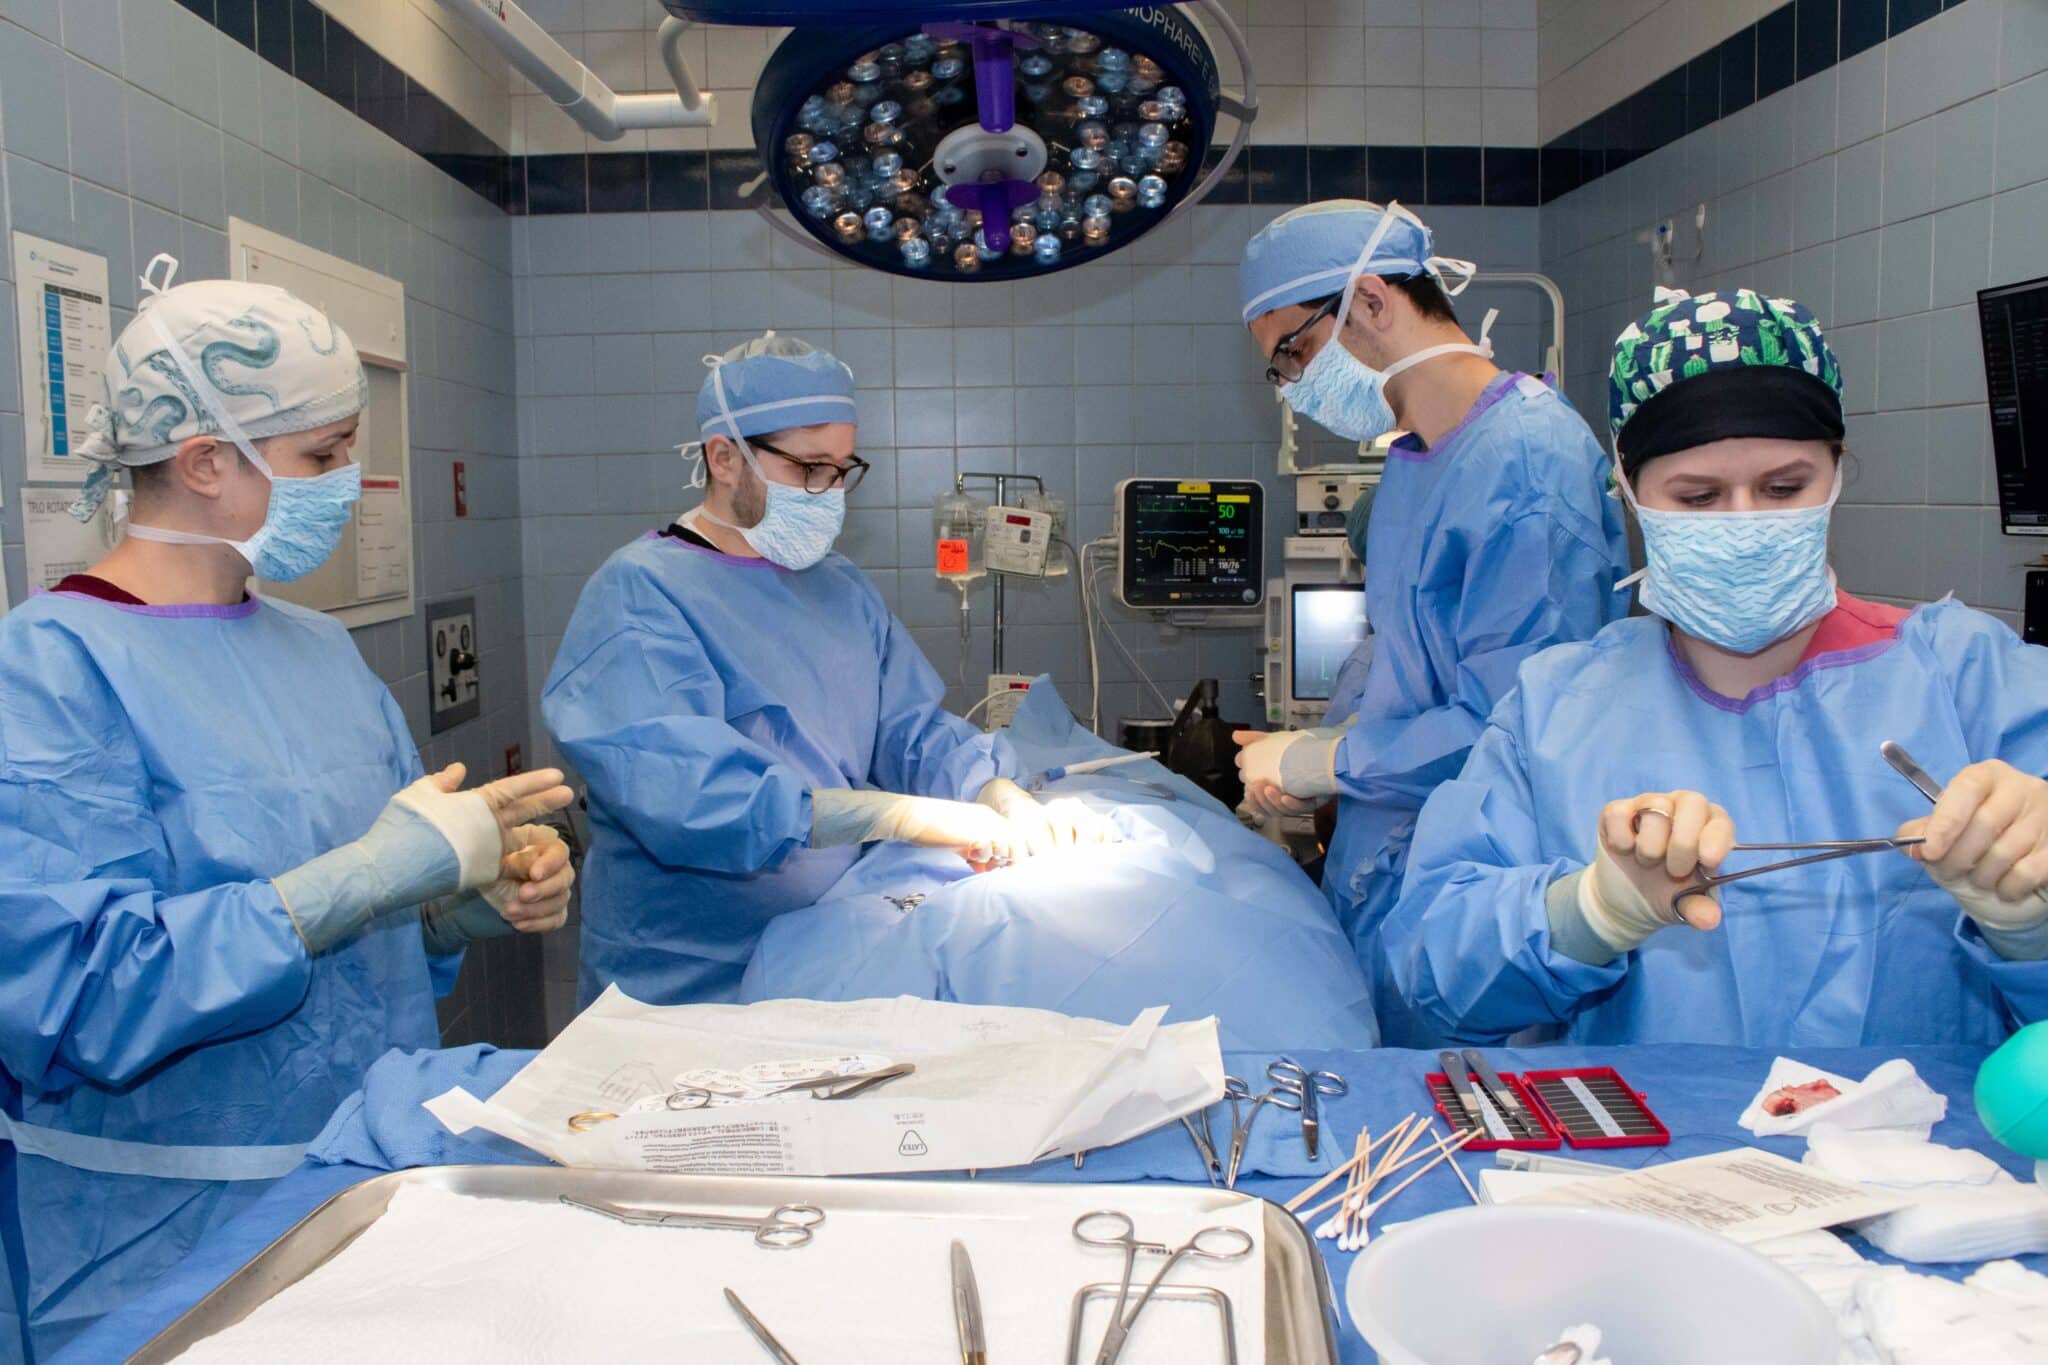 AMC's surgery team performs a procedure